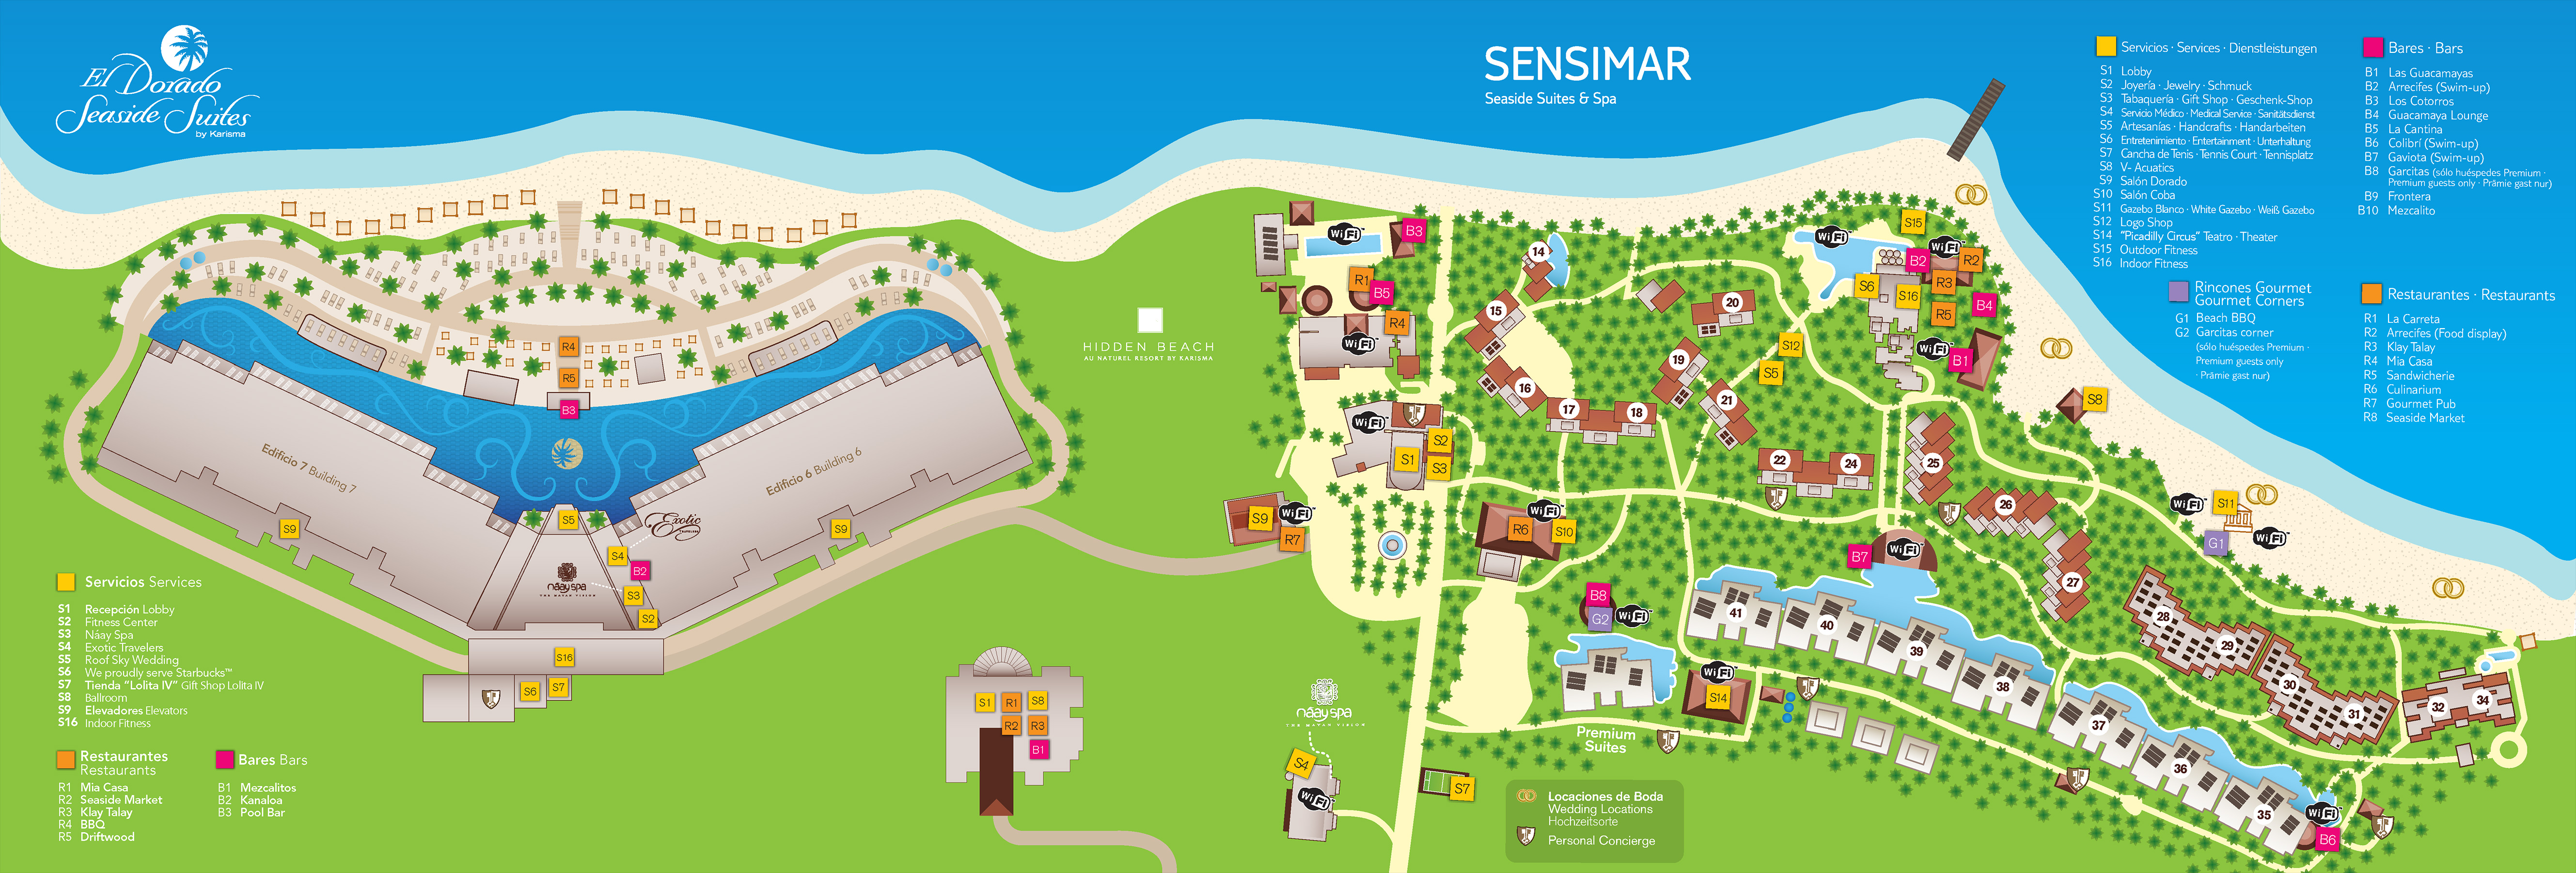 Download the resort map for El Dorado Seaside Suites.